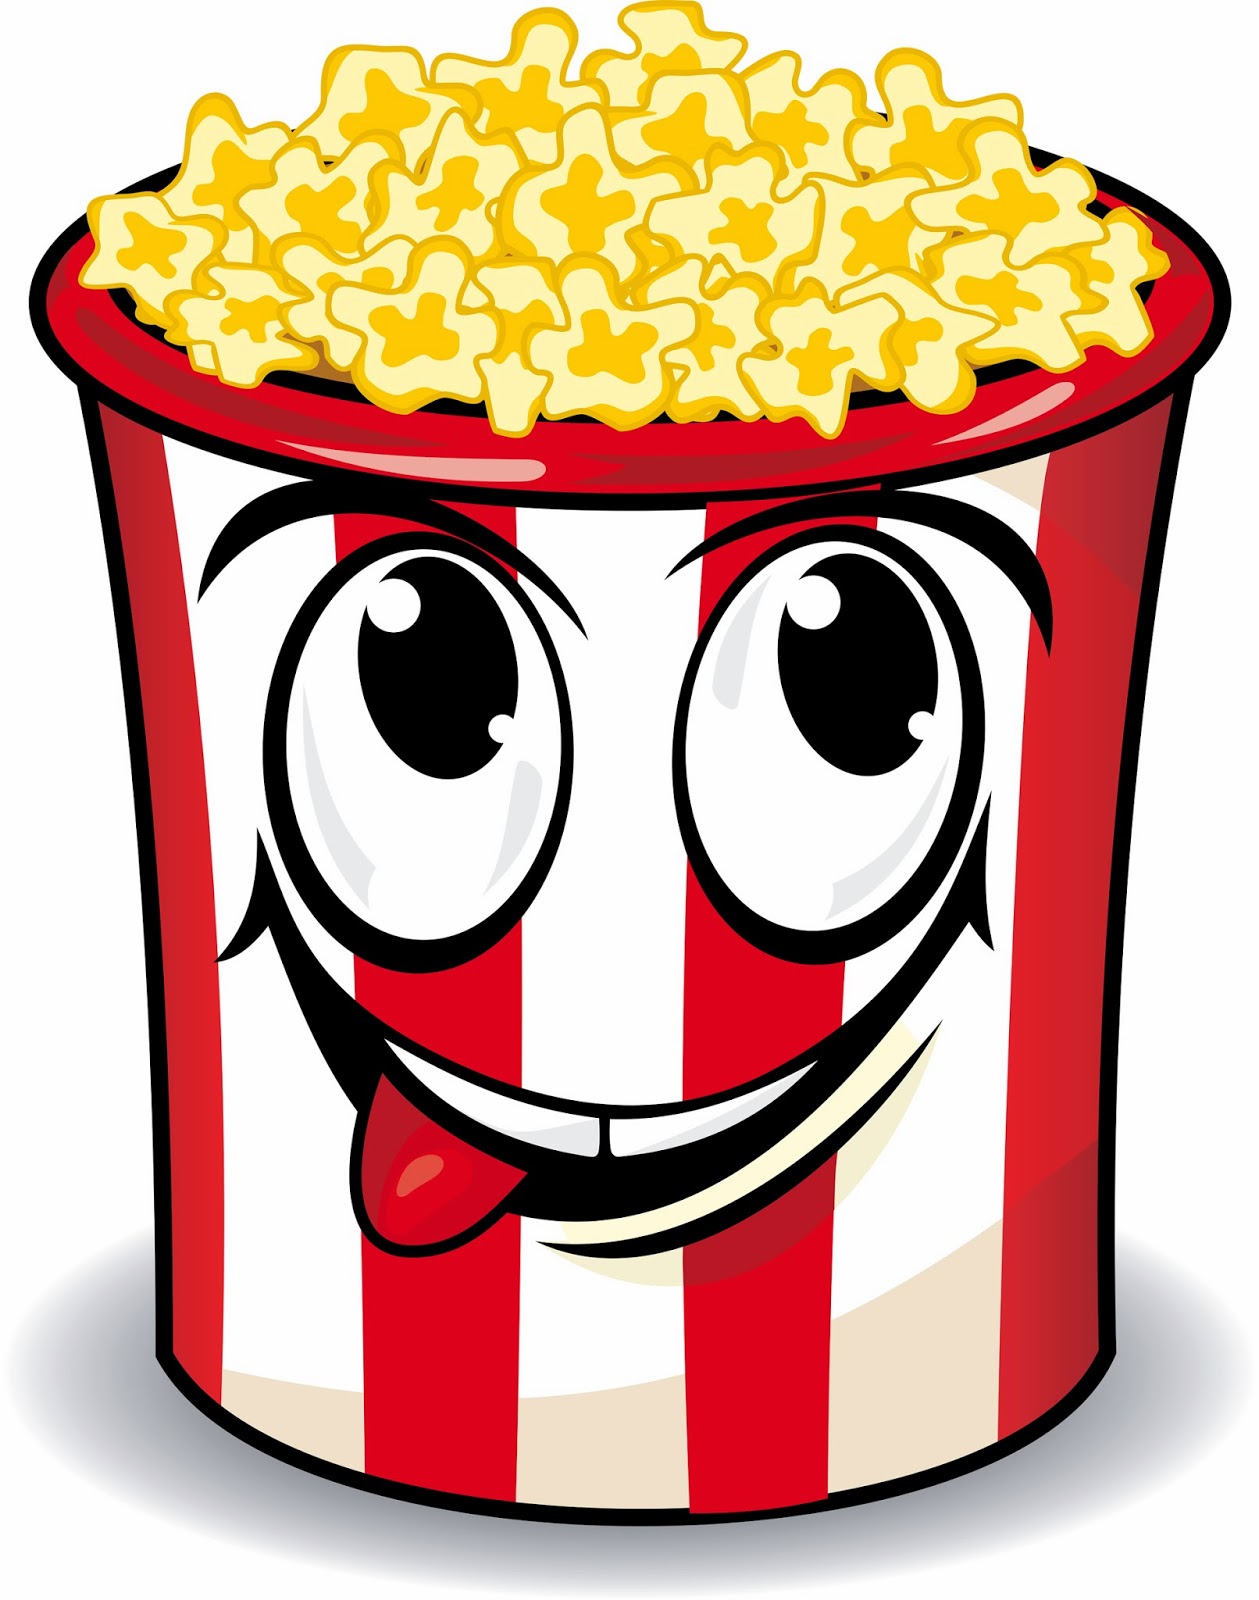 Free Popcorn Machine Cliparts, Download Free Popcorn Machine Cliparts